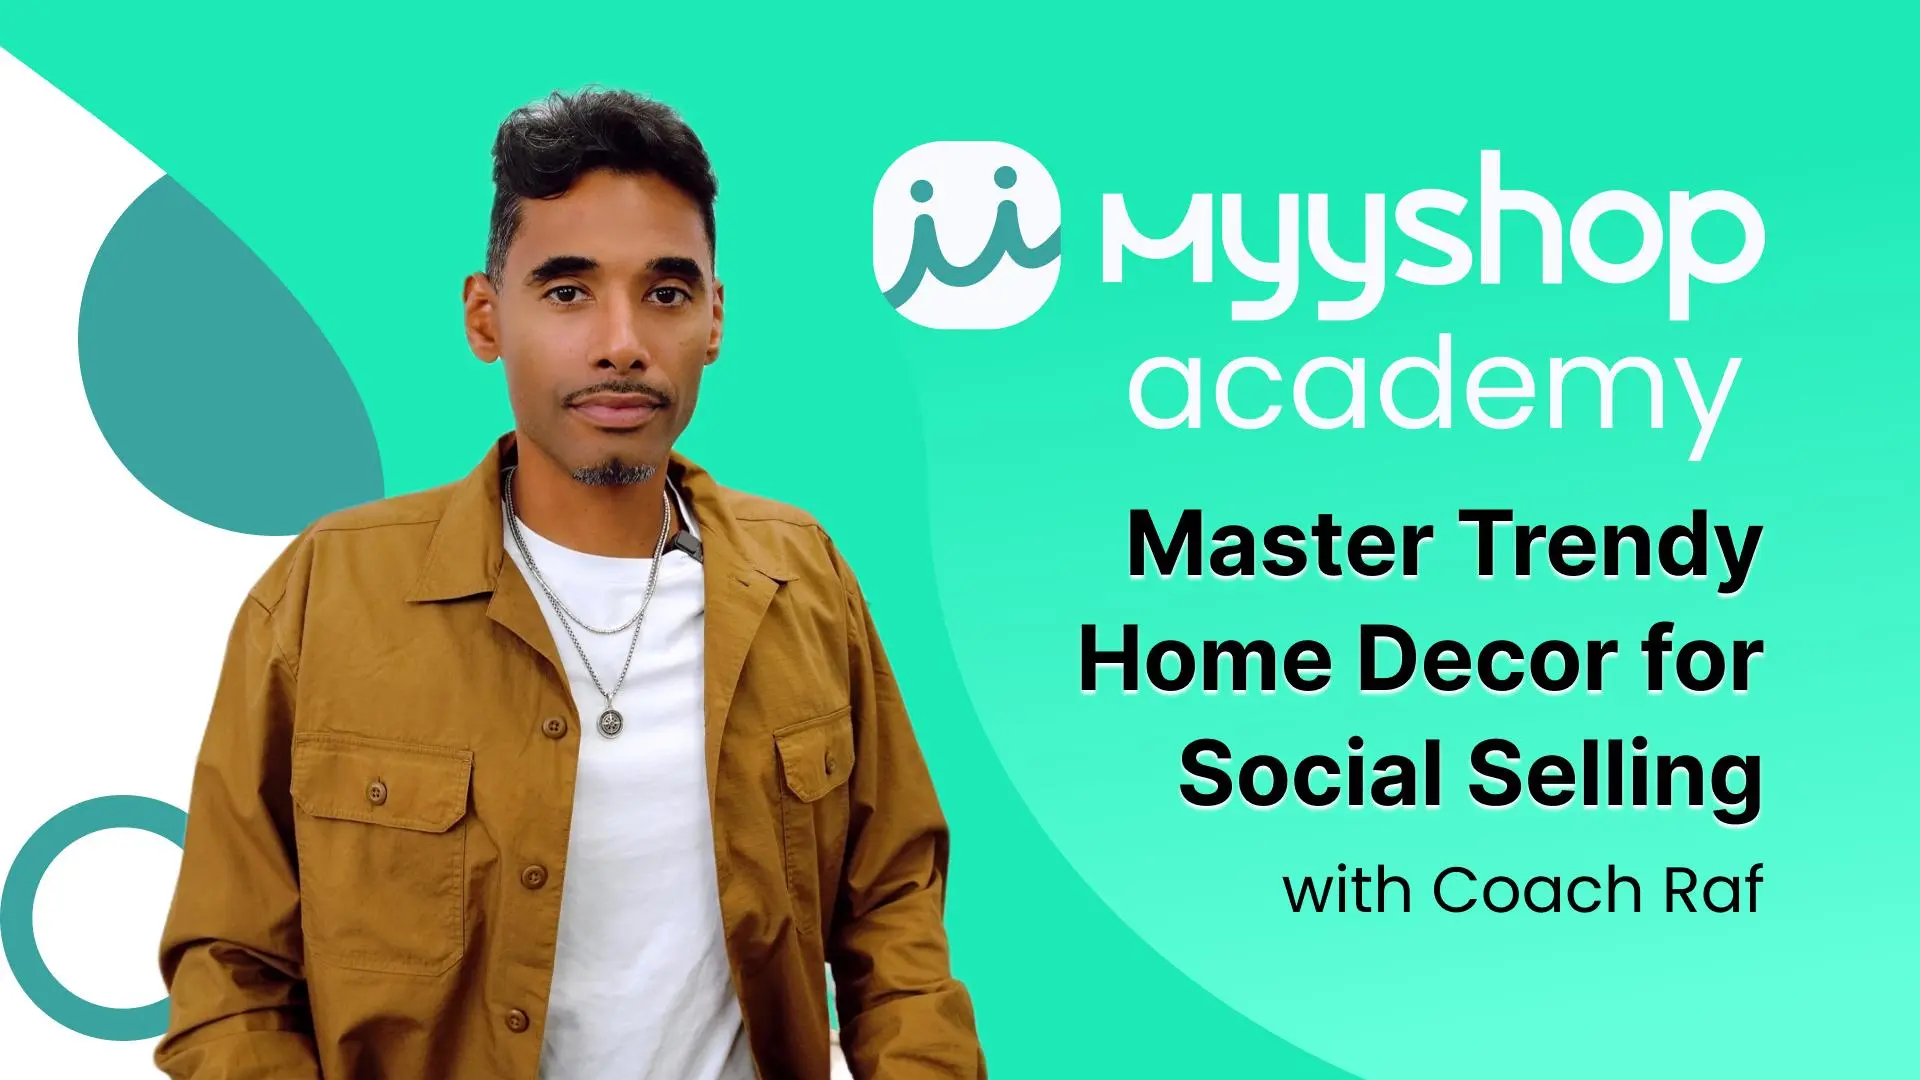 Master Trendy Home Decor for Social Selling